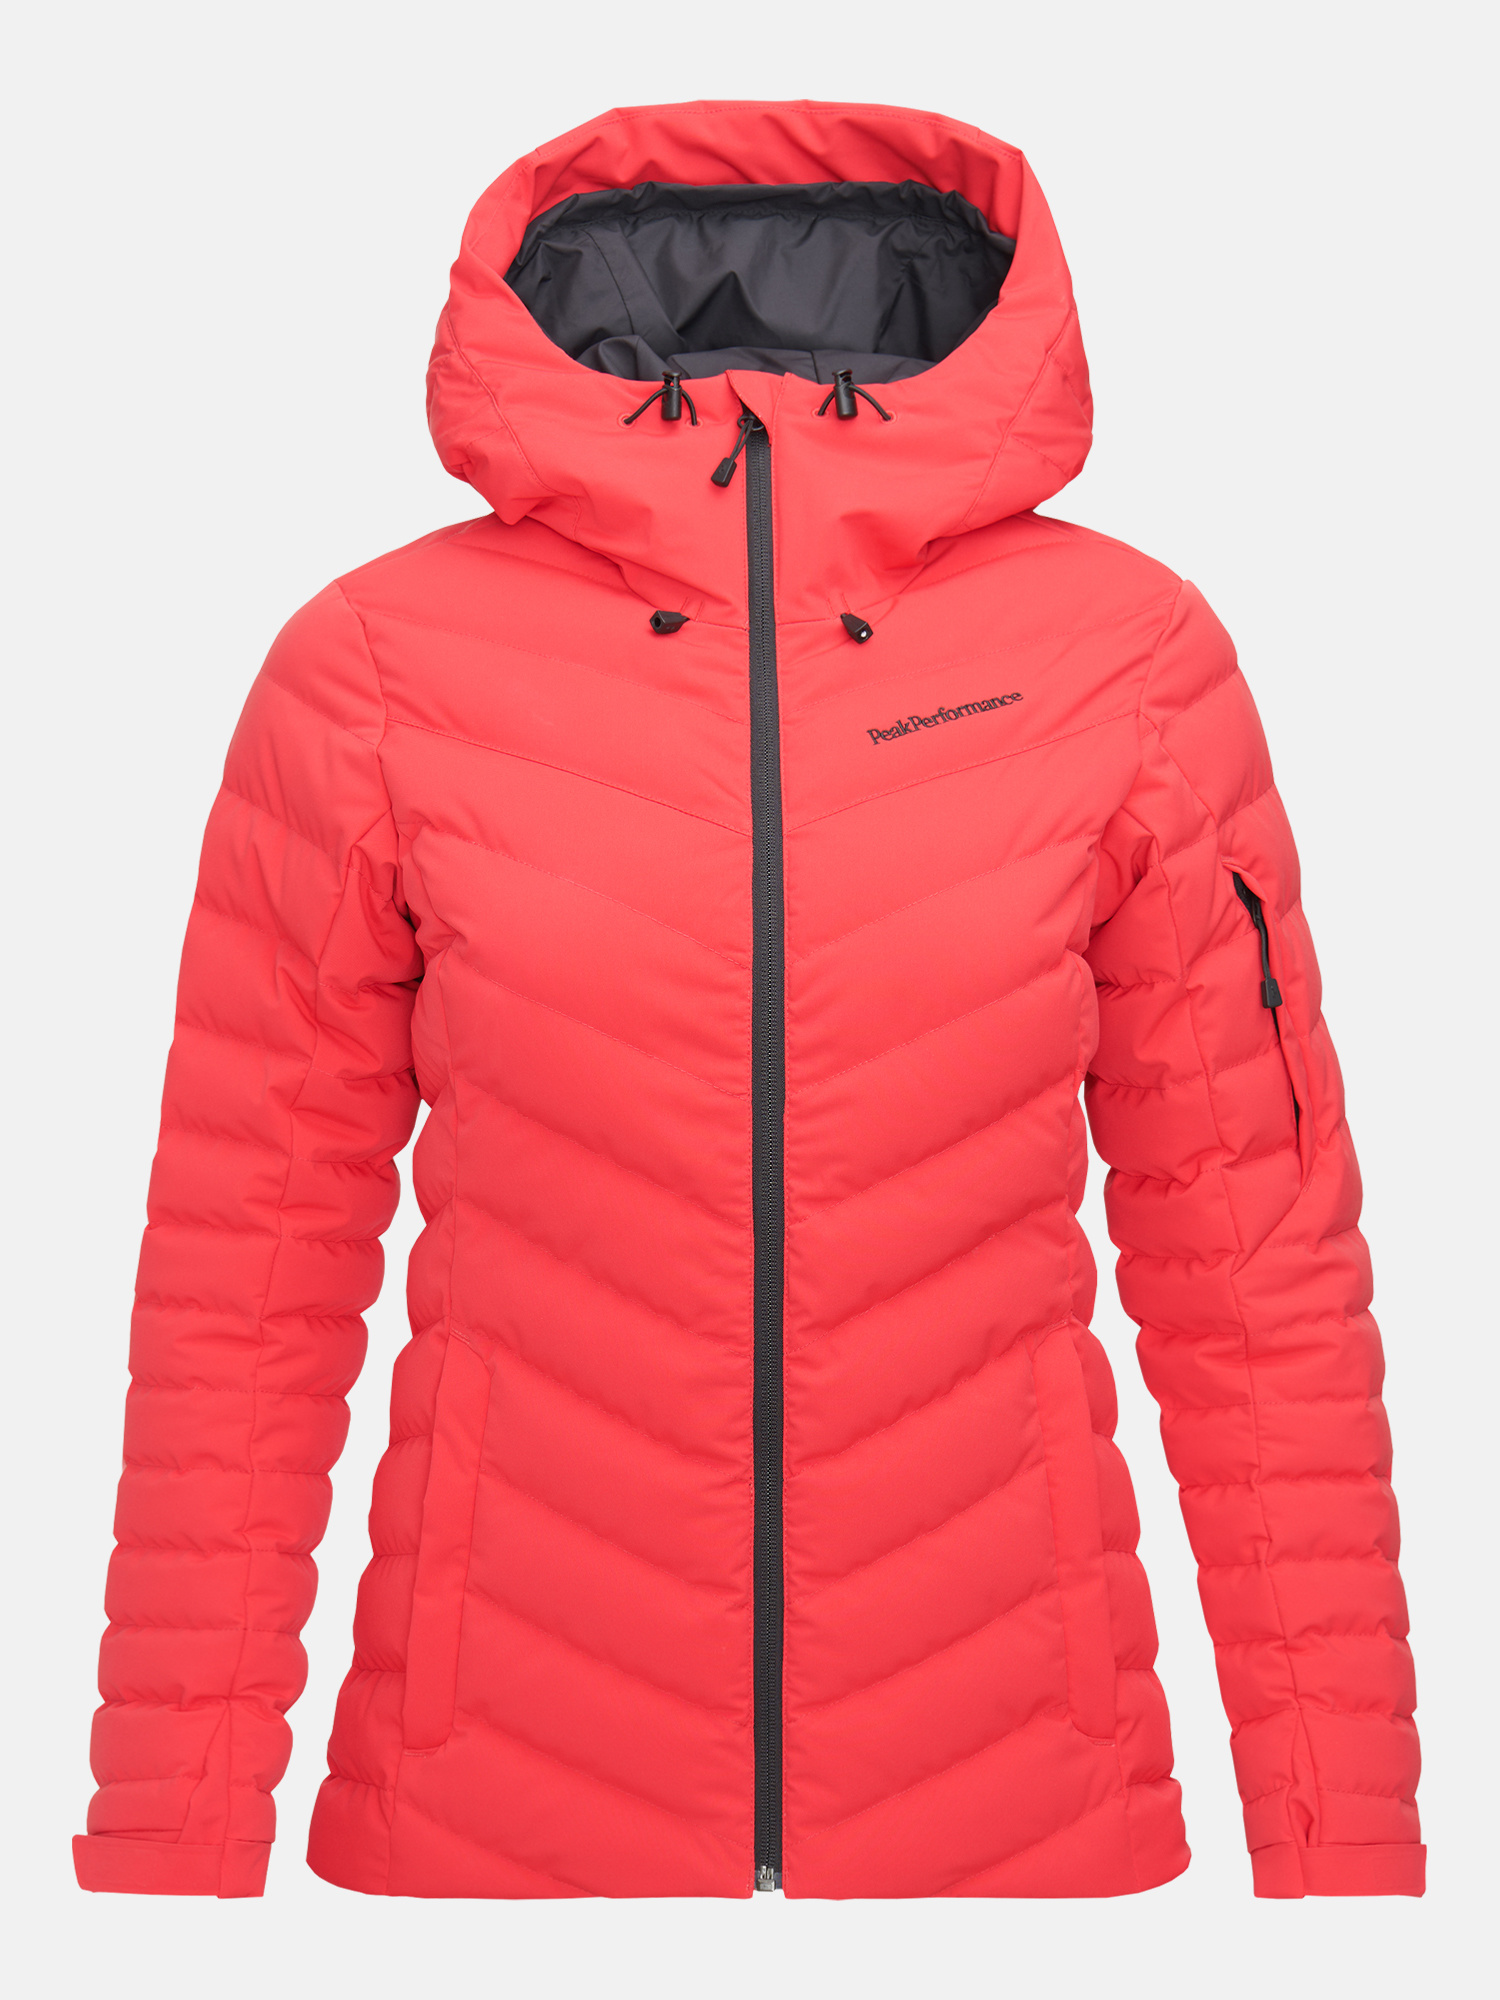 moordenaar manipuleren duisternis Peak Performance Women's Frost Ski Jacket – Polar Red - Free Style Sport